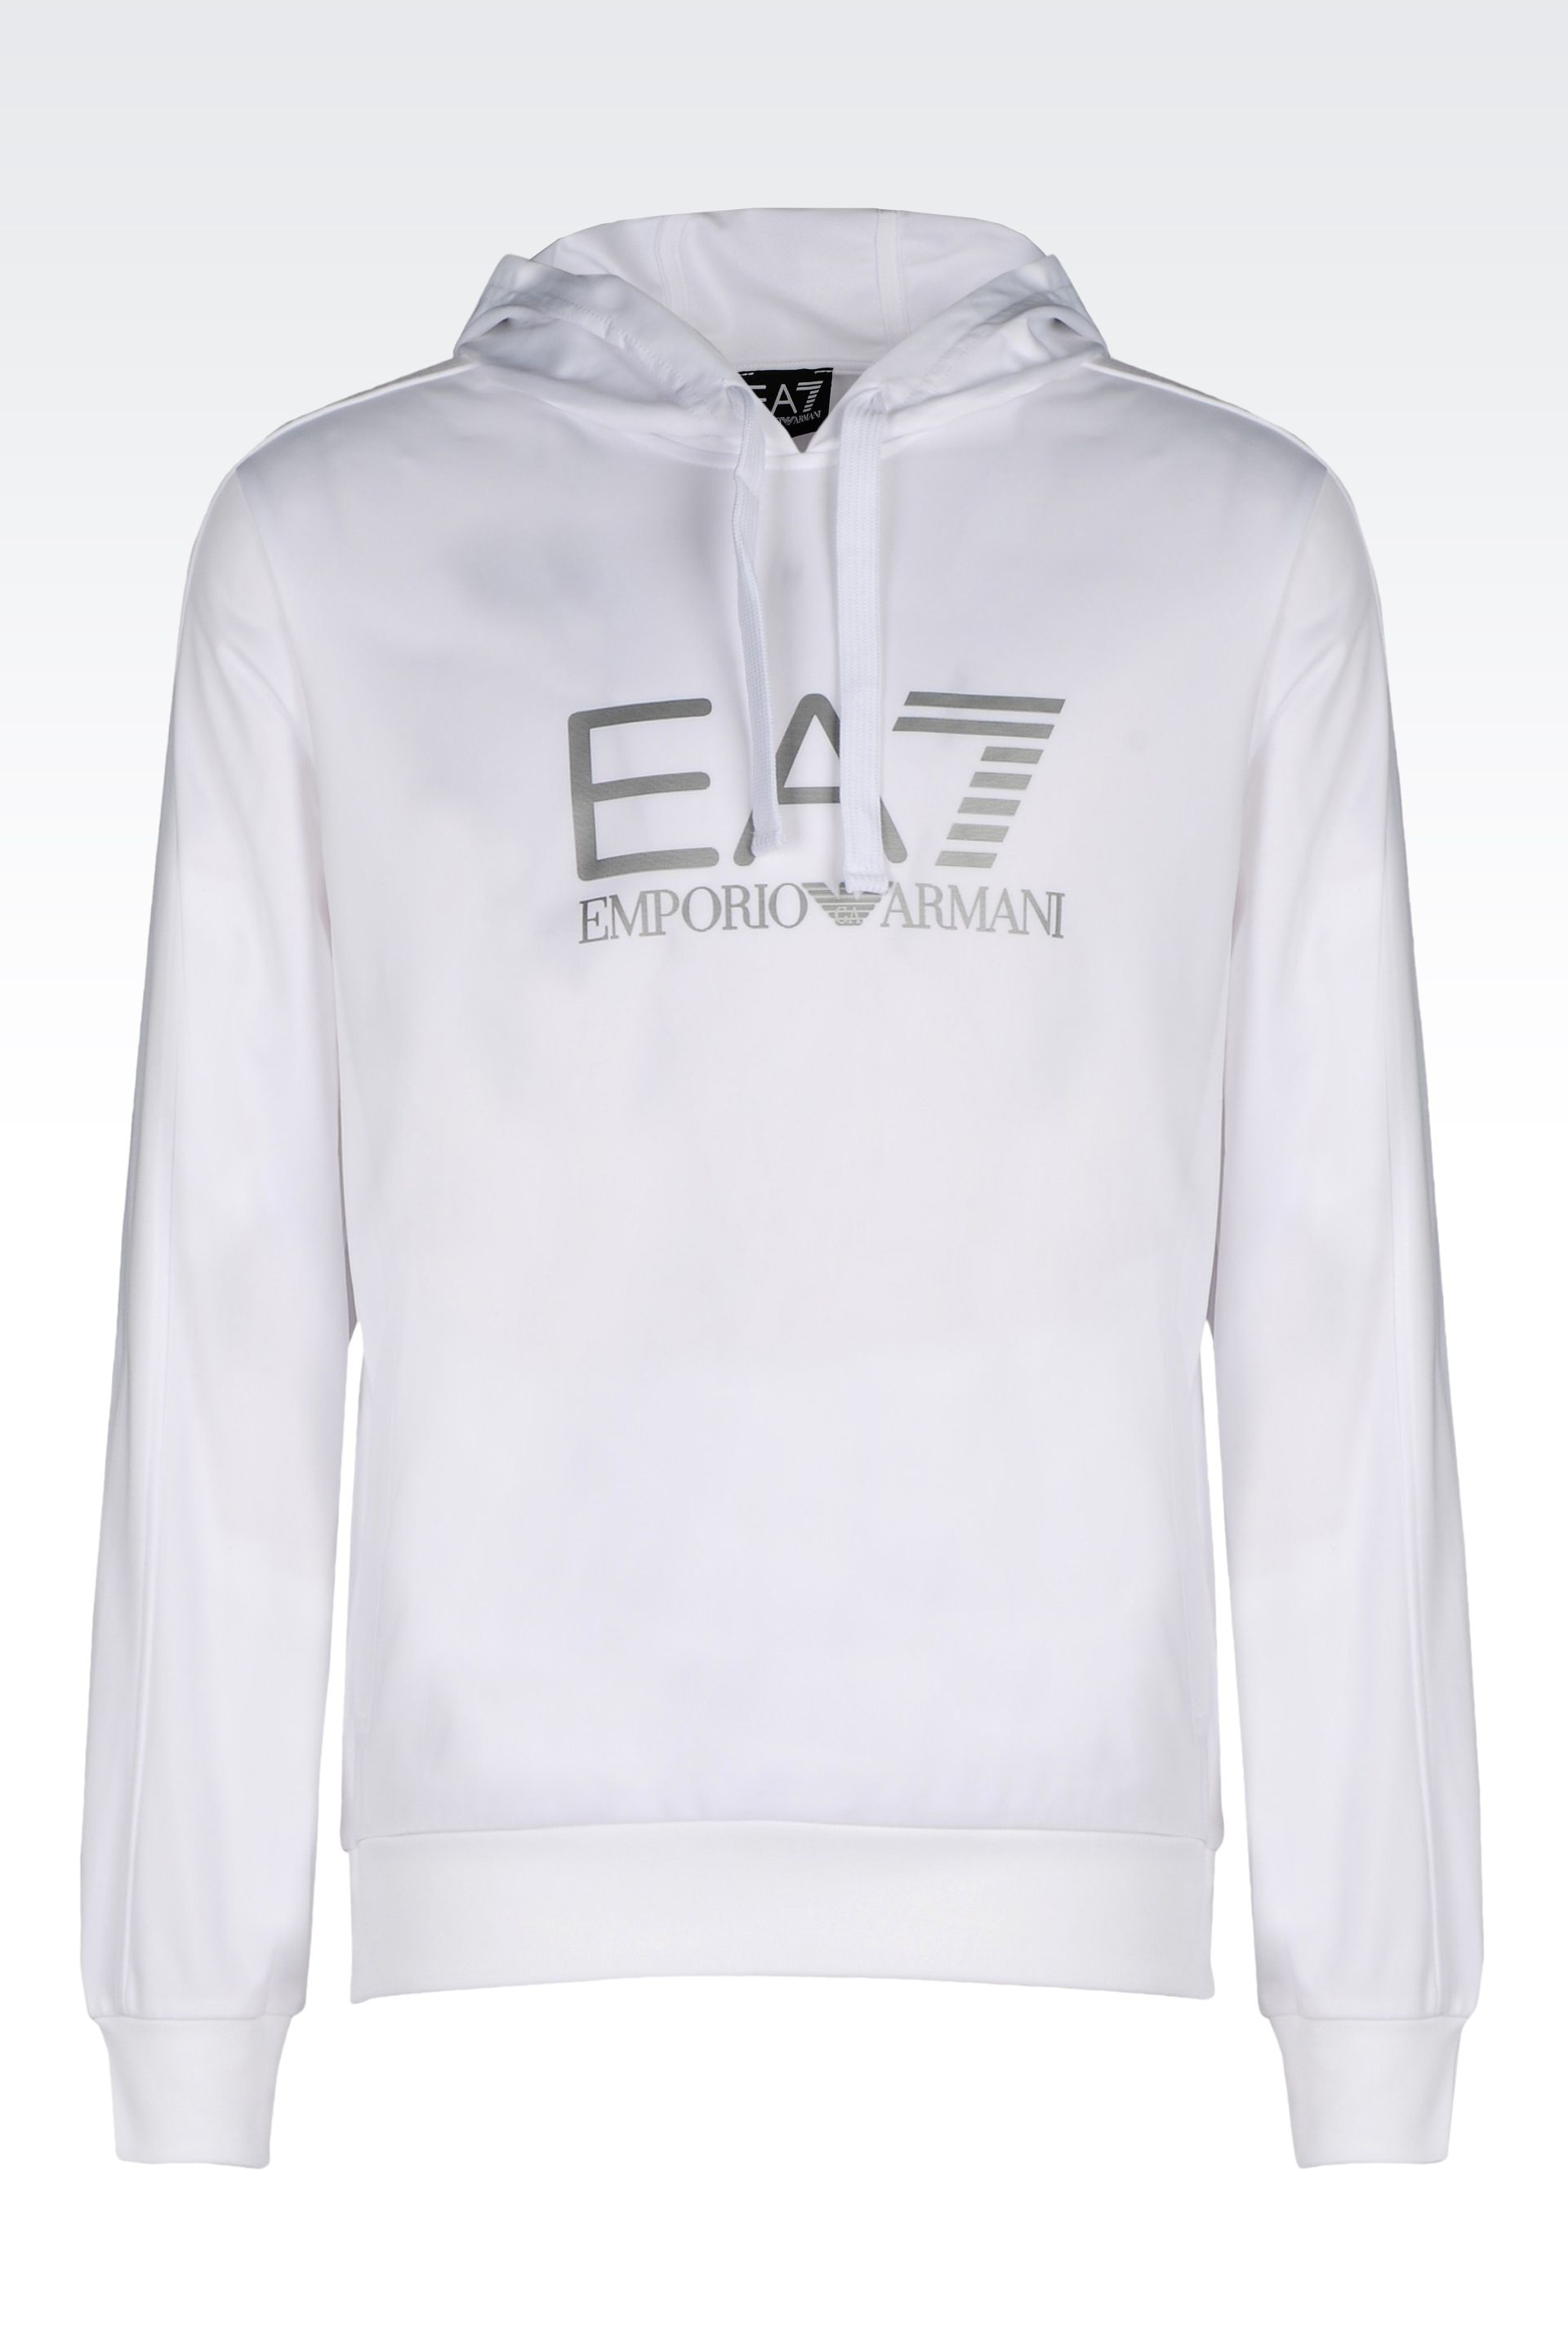 ea7 sweatshirt white - 58% OFF 